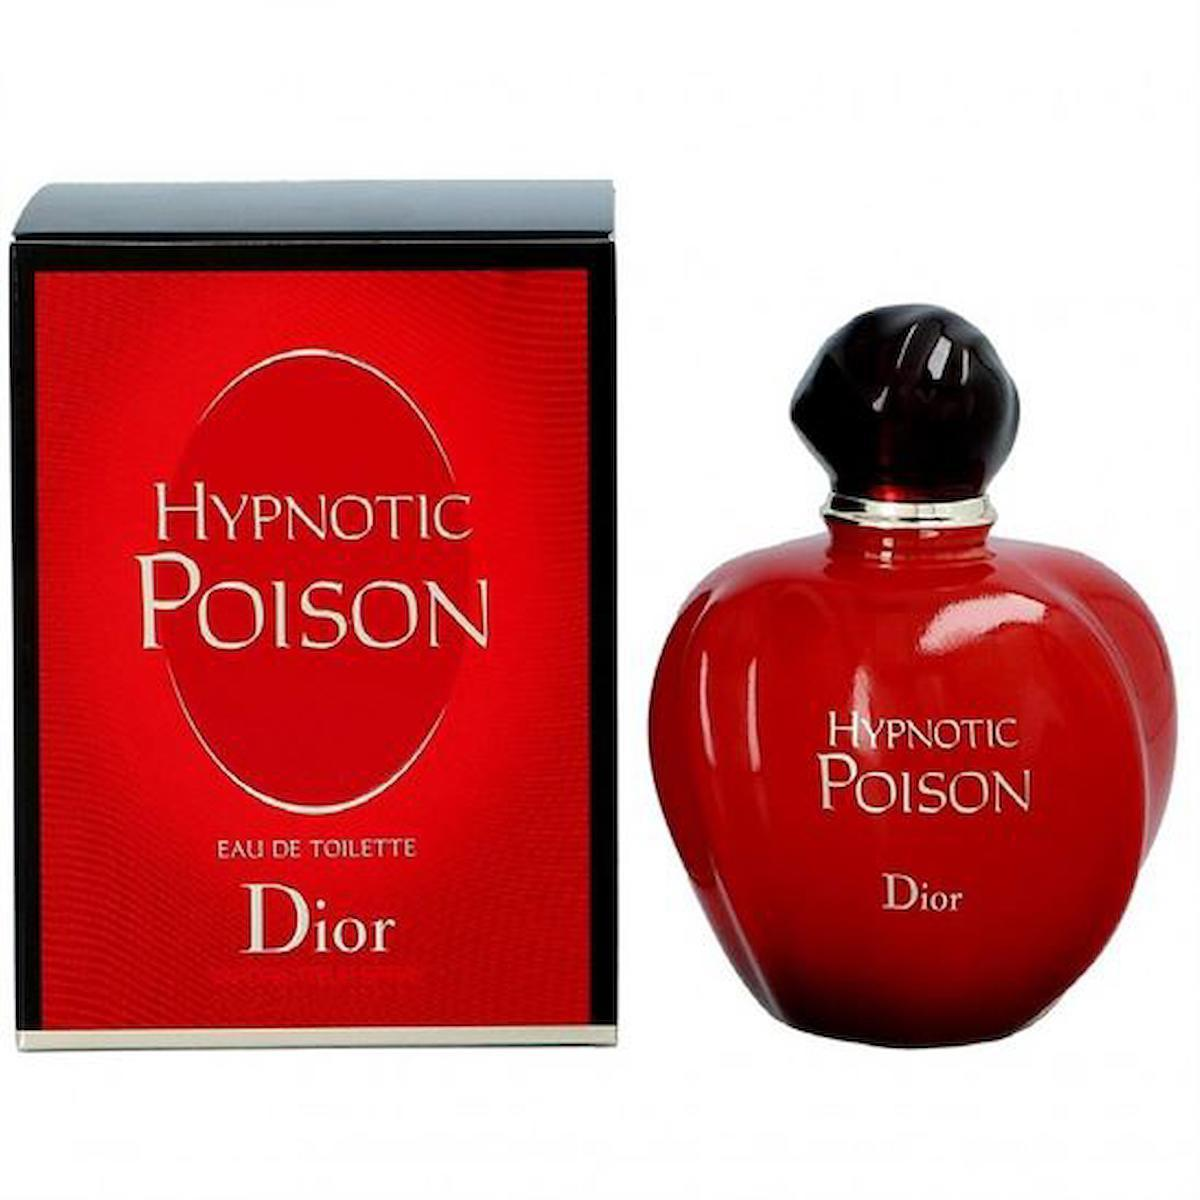 Dior Hypnotic Poison EDT Oryantal Kadın Parfüm 150 ml